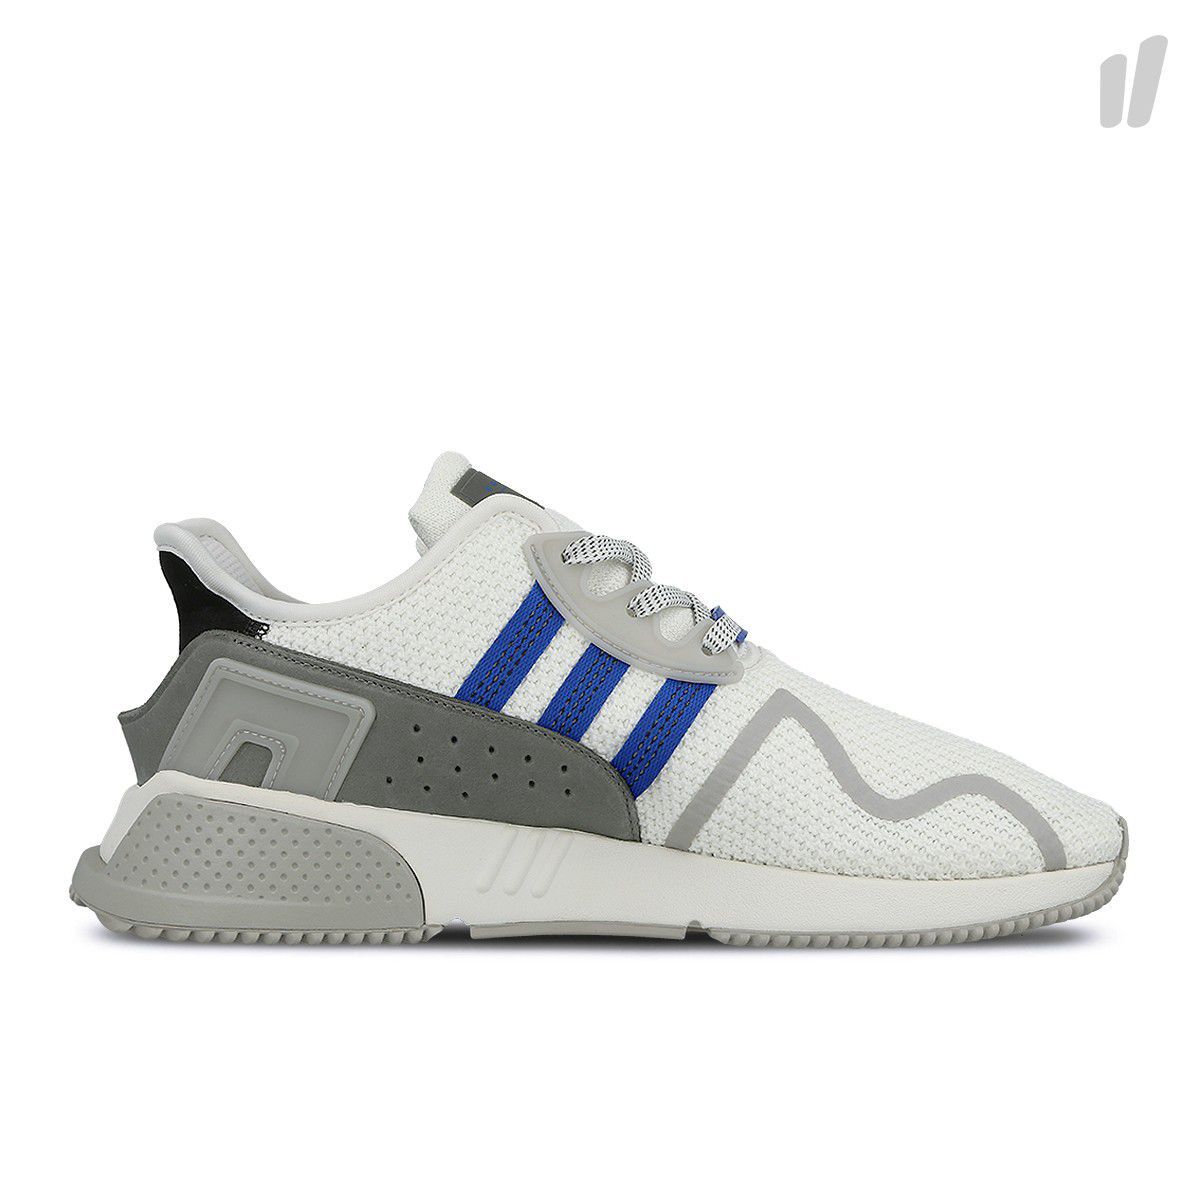 Adidas Eqt Cushion Adv White Running Shoes - Buy Adidas Eqt Cushion Adv ...